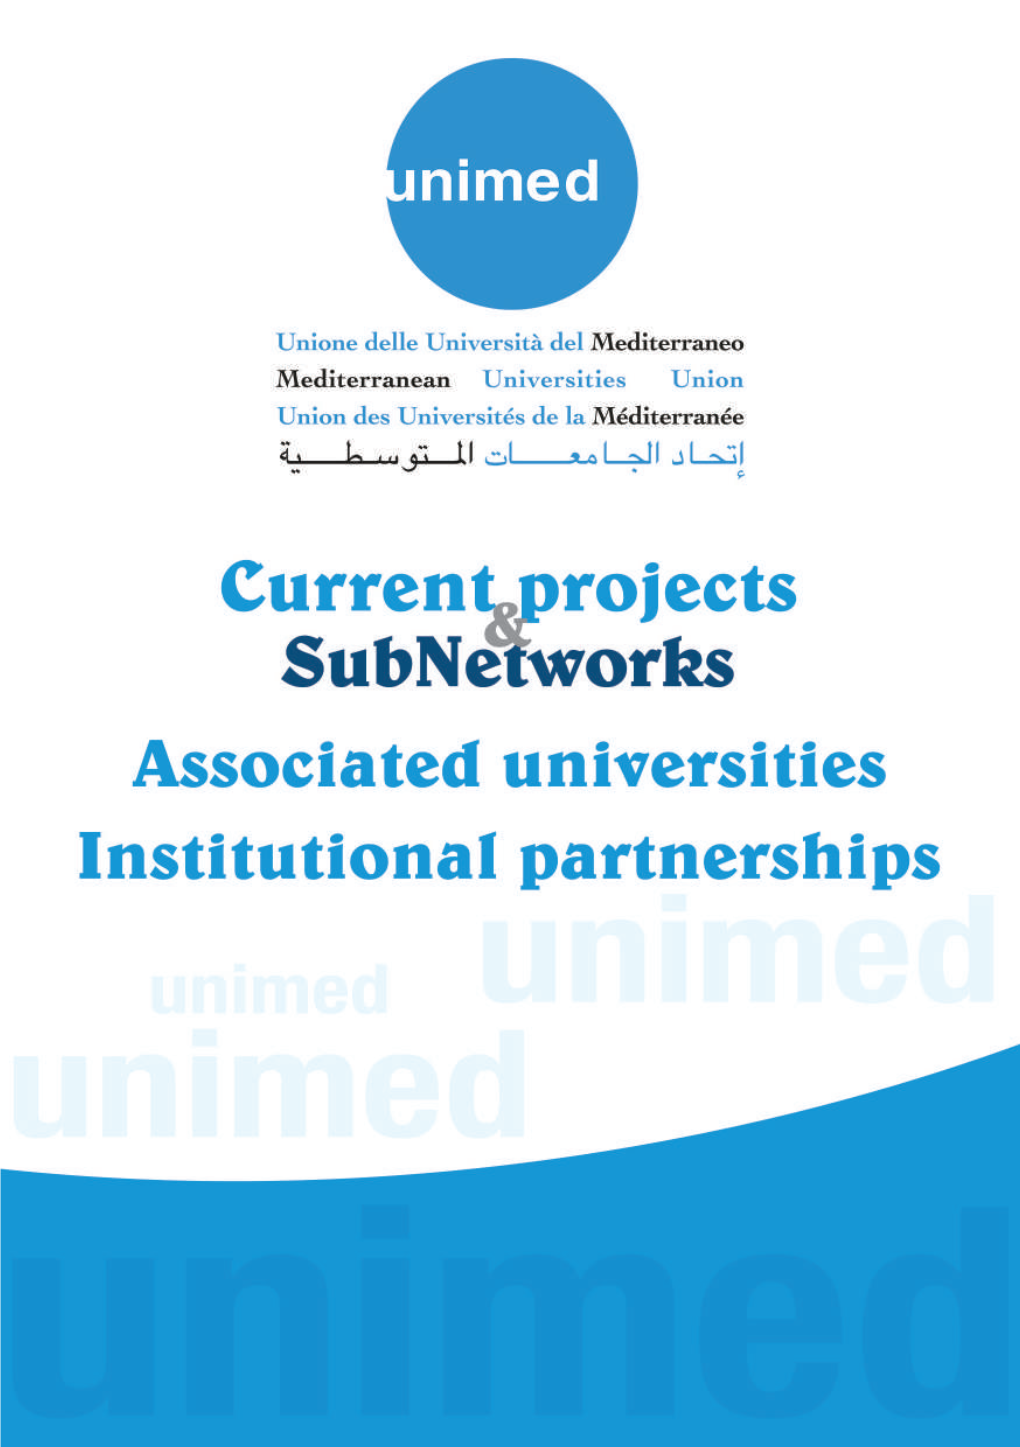 1 UNIMED • Mediterranean Universities Union